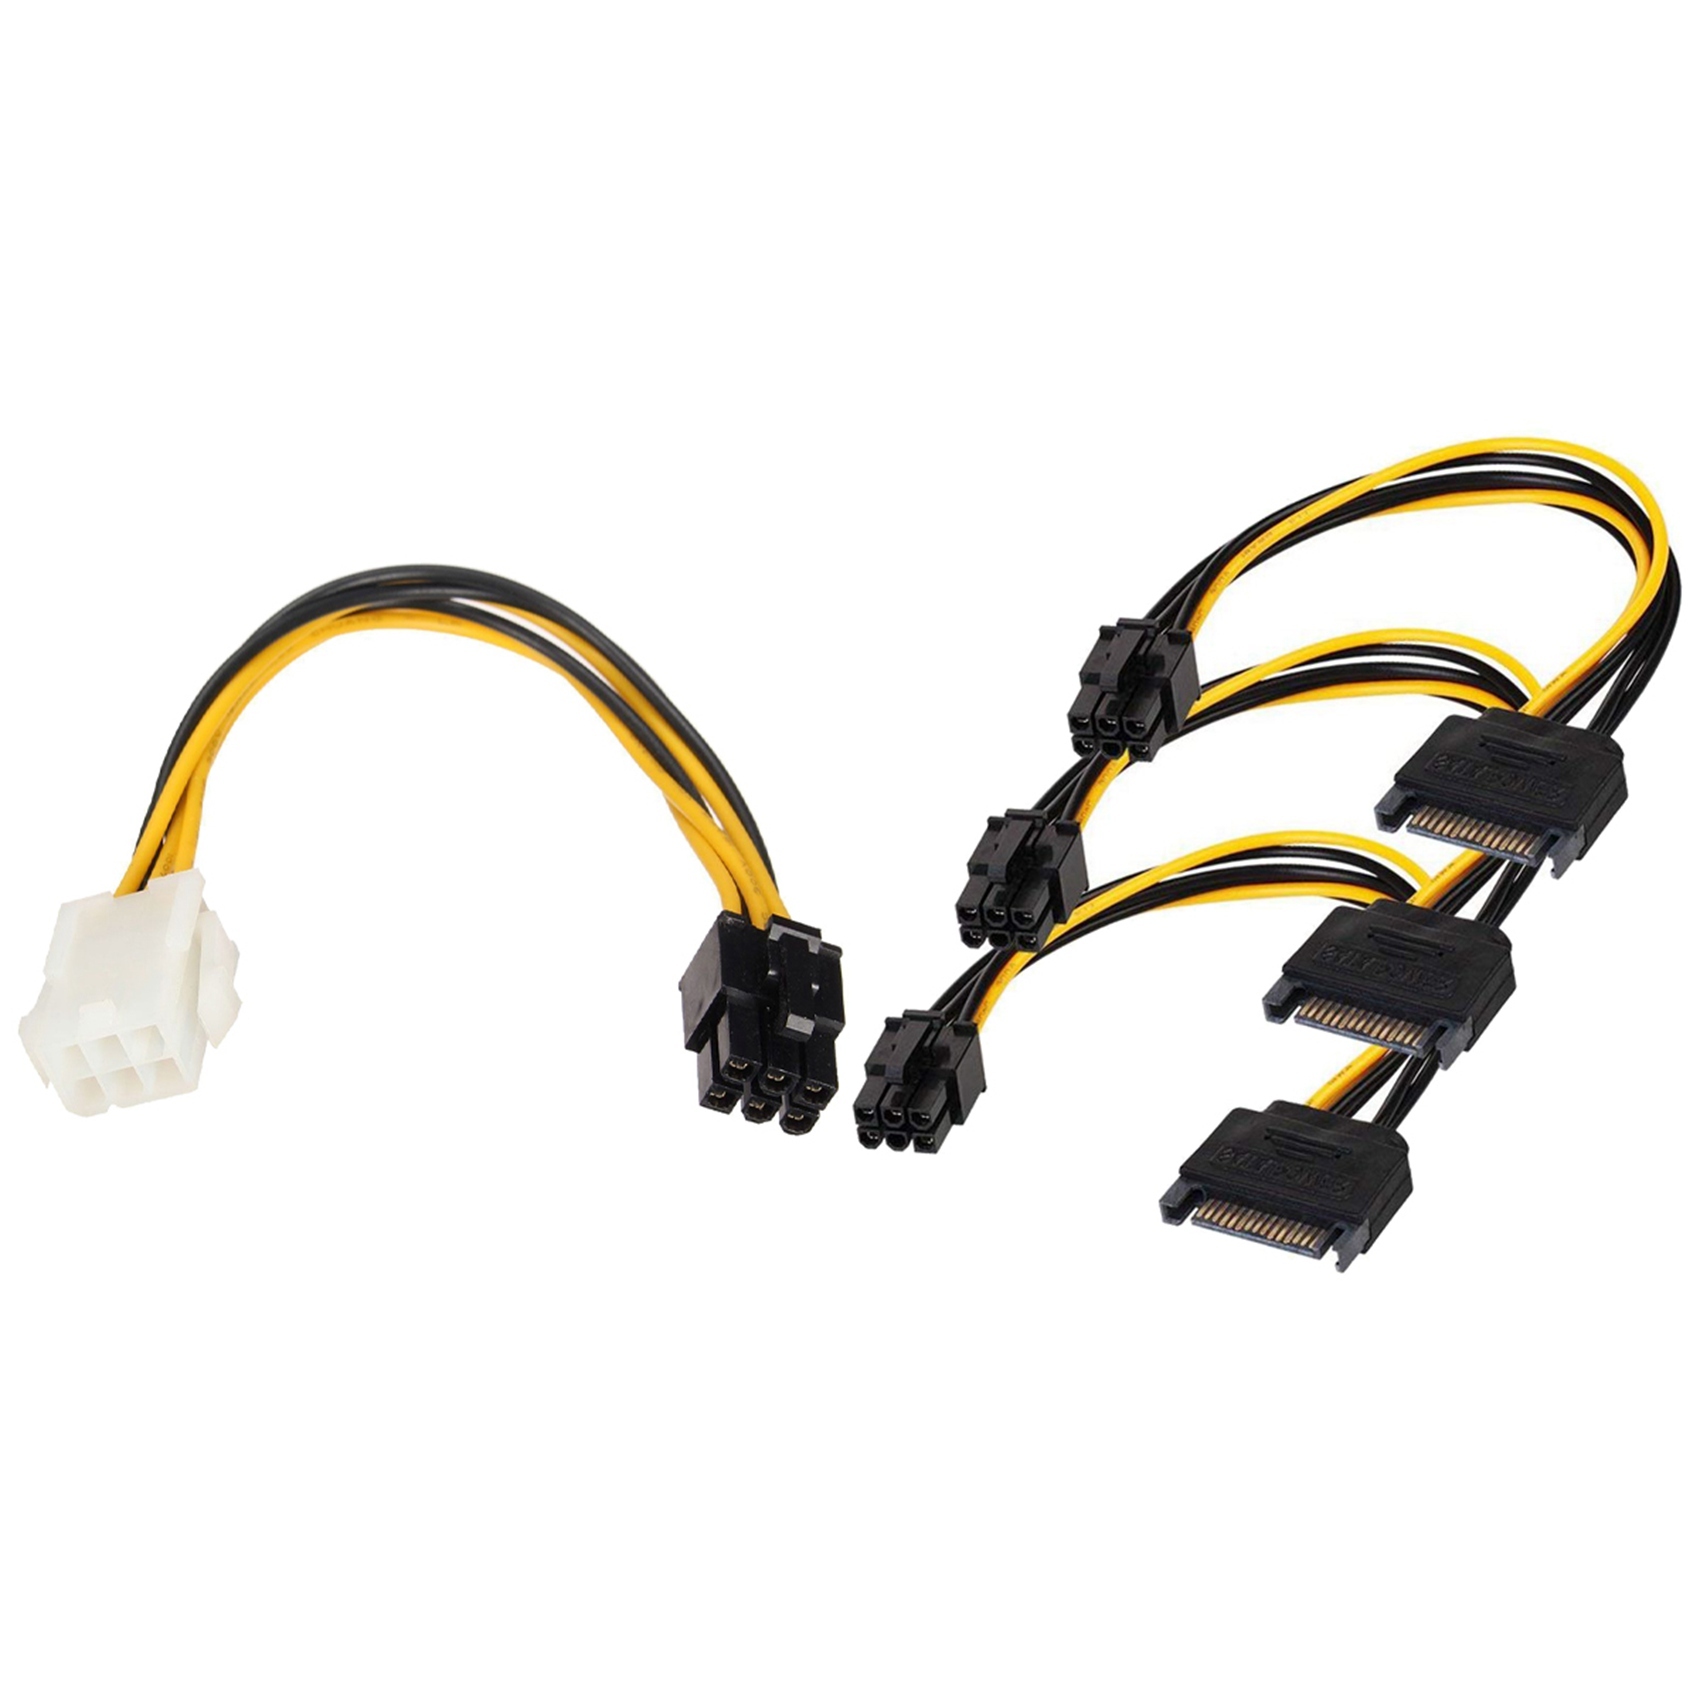 Connect the pcie power cable. Сопротивления на линии питания PCI-E.